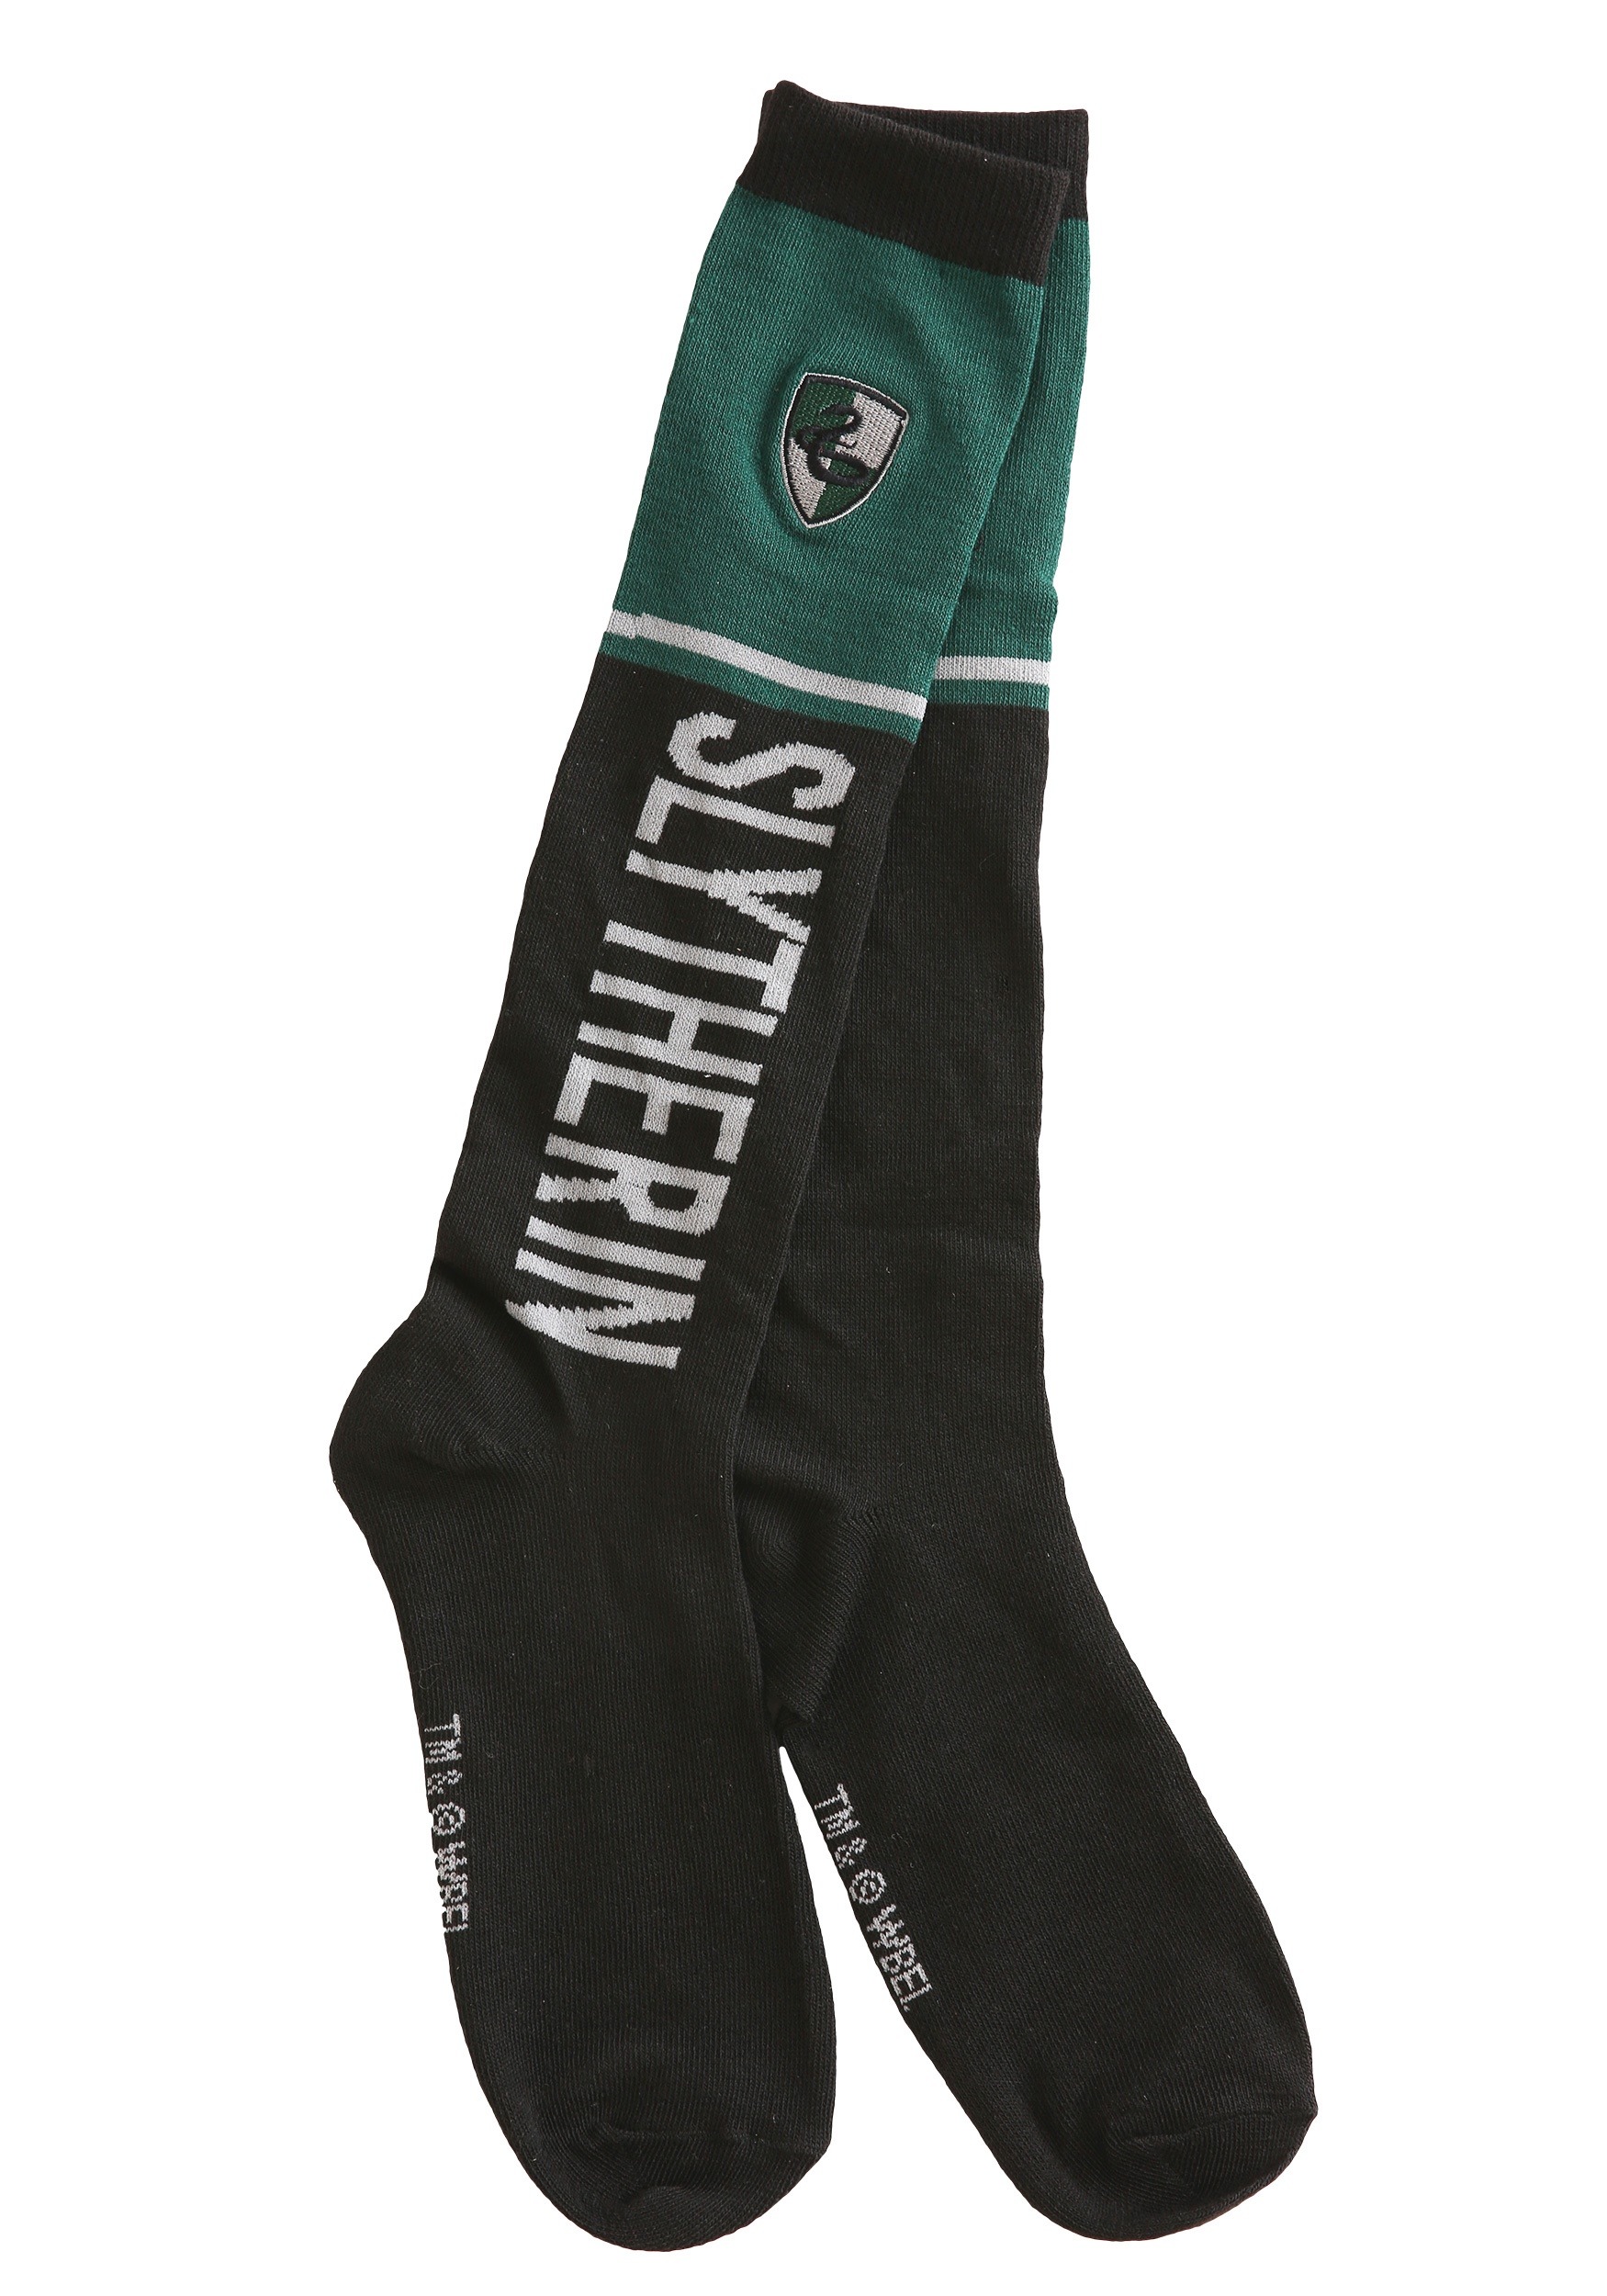 Harry Potter Slytherin Cape Socks Knee High Socks with Capes Sock Size 9-11 